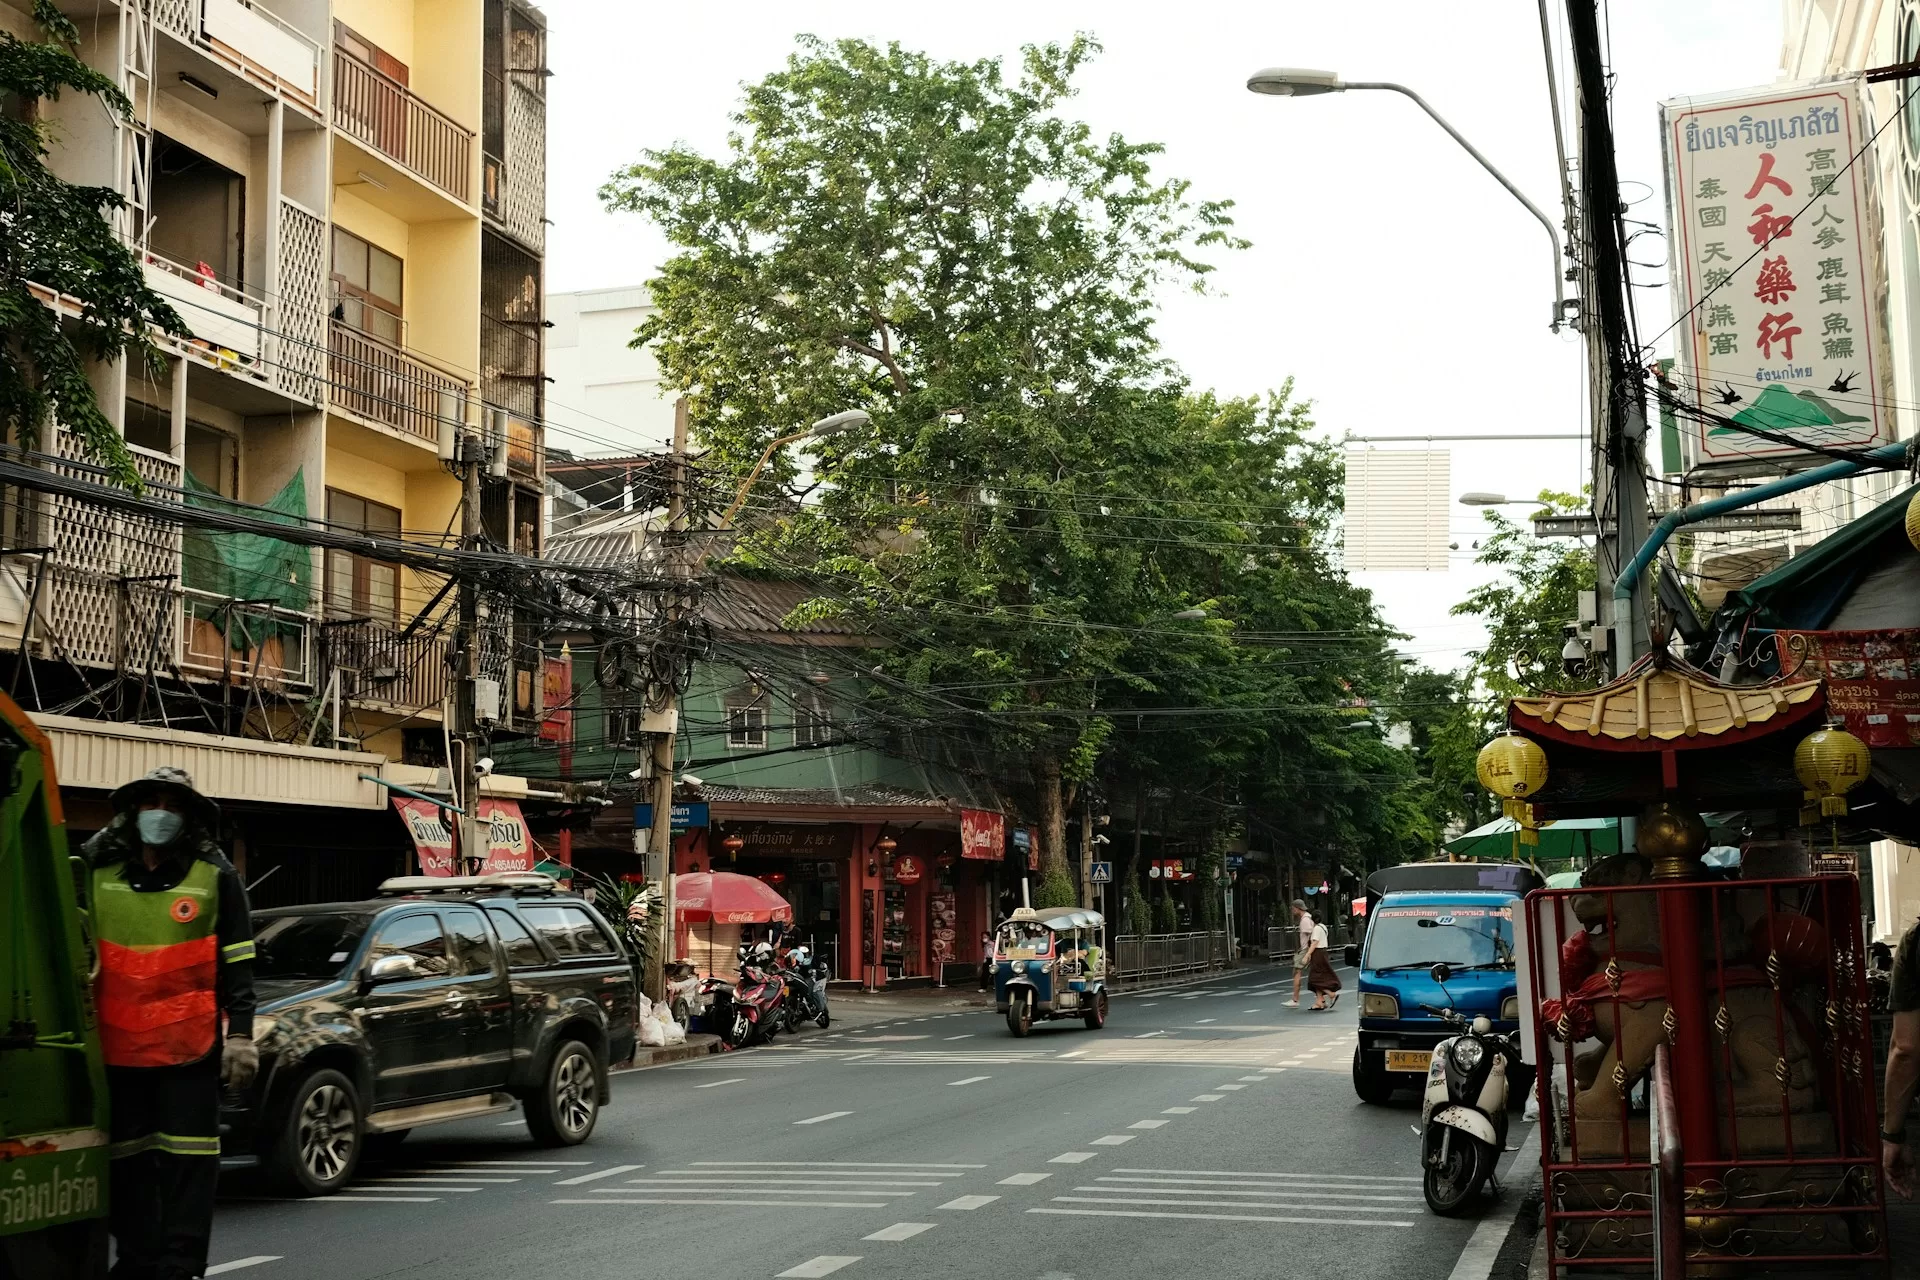 Pic of a Bangkok neighborhood street.